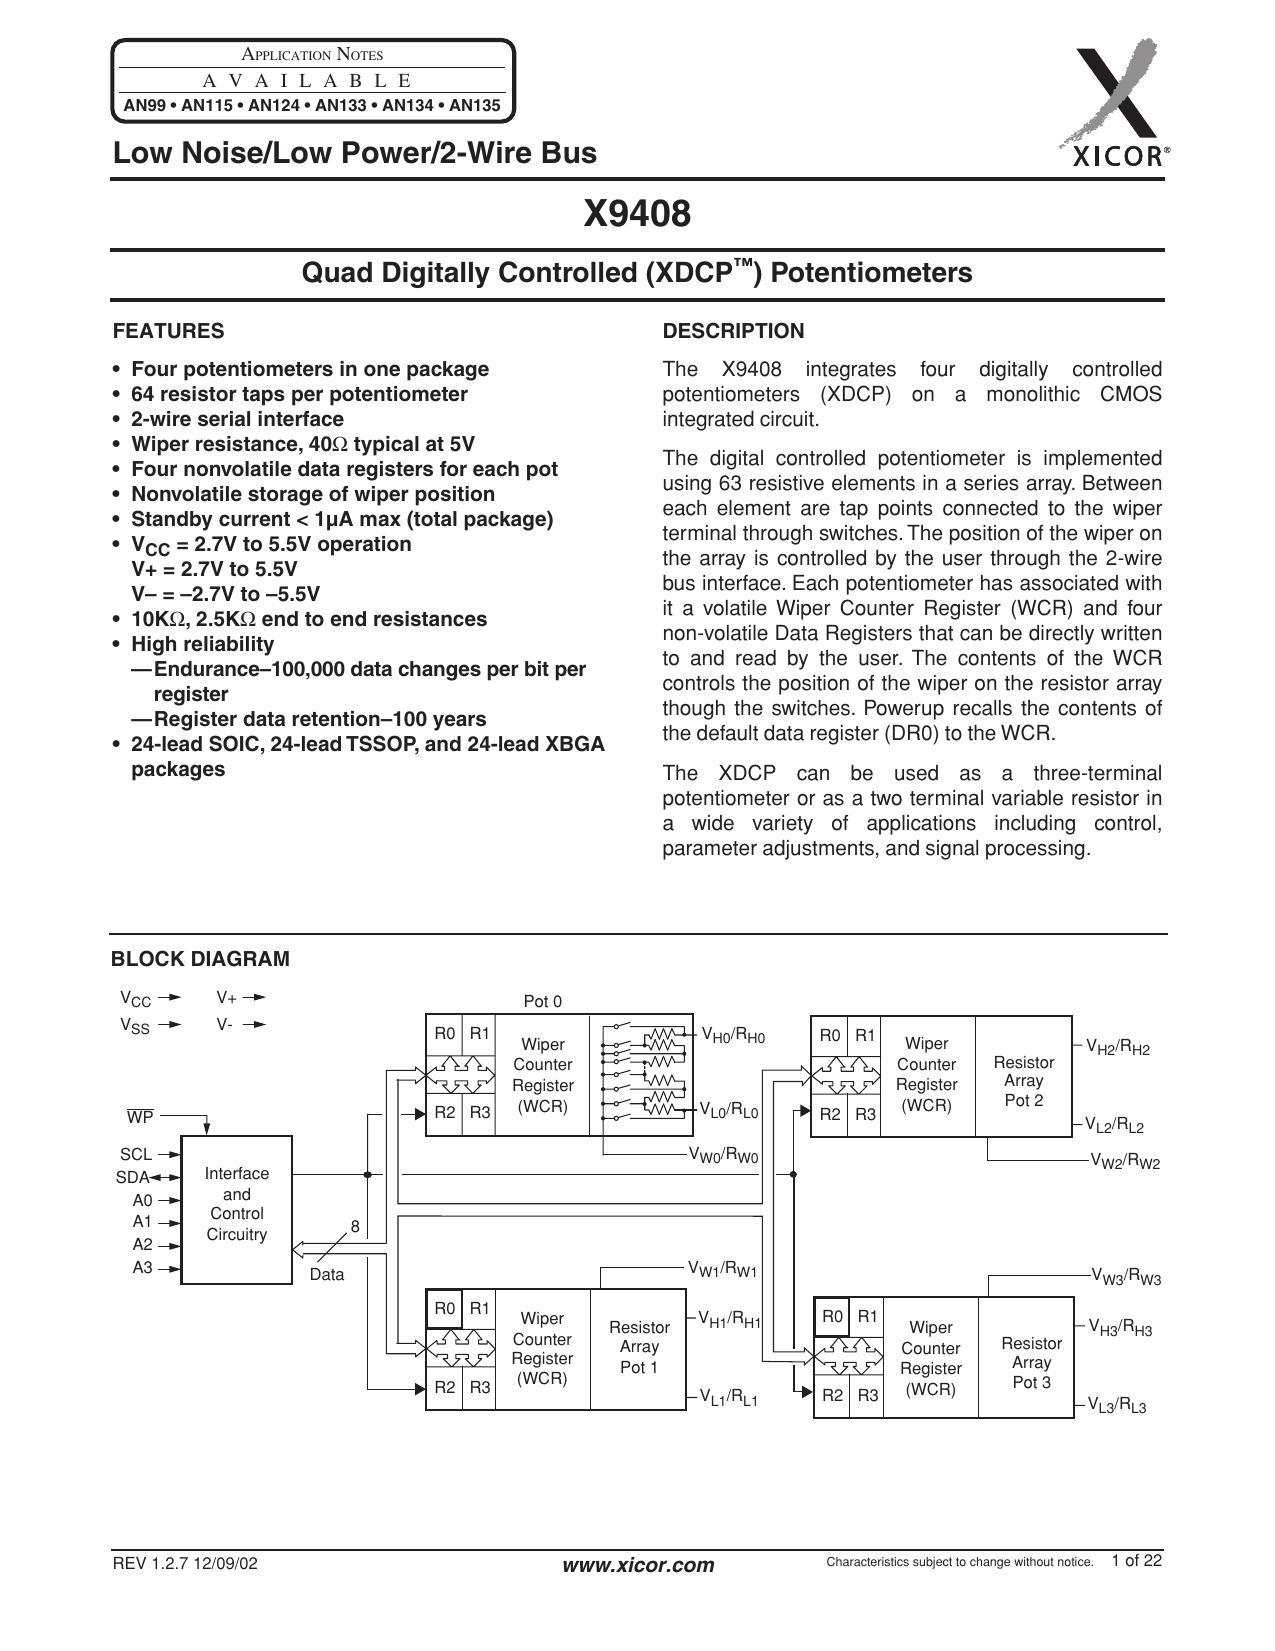 x9408-quad-digitally-controlled-potentiometers-xdcp.pdf